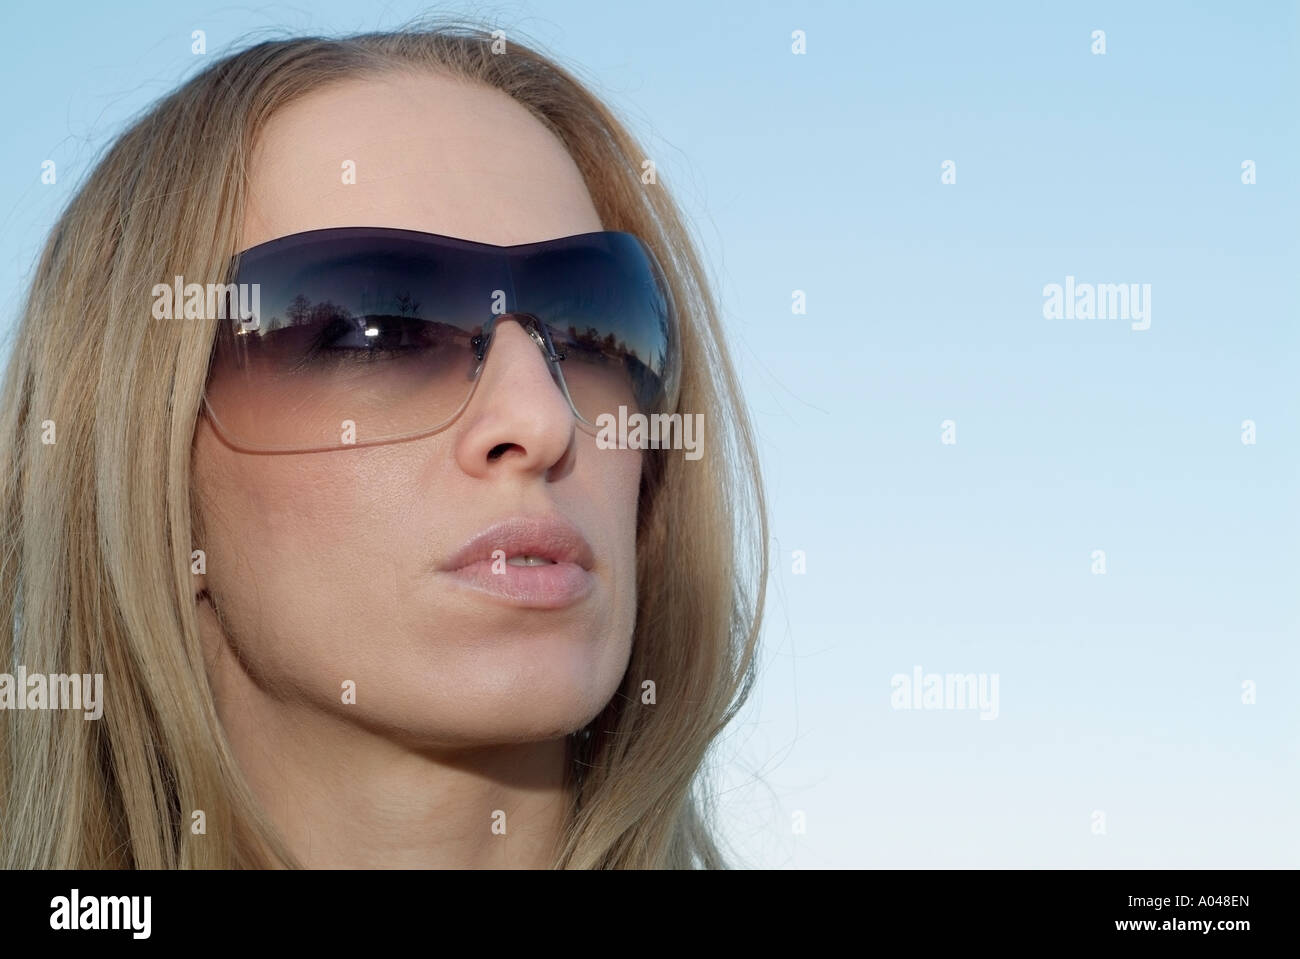 Woman Wearing Sunglasses Close Up Face Shot Stock Photo